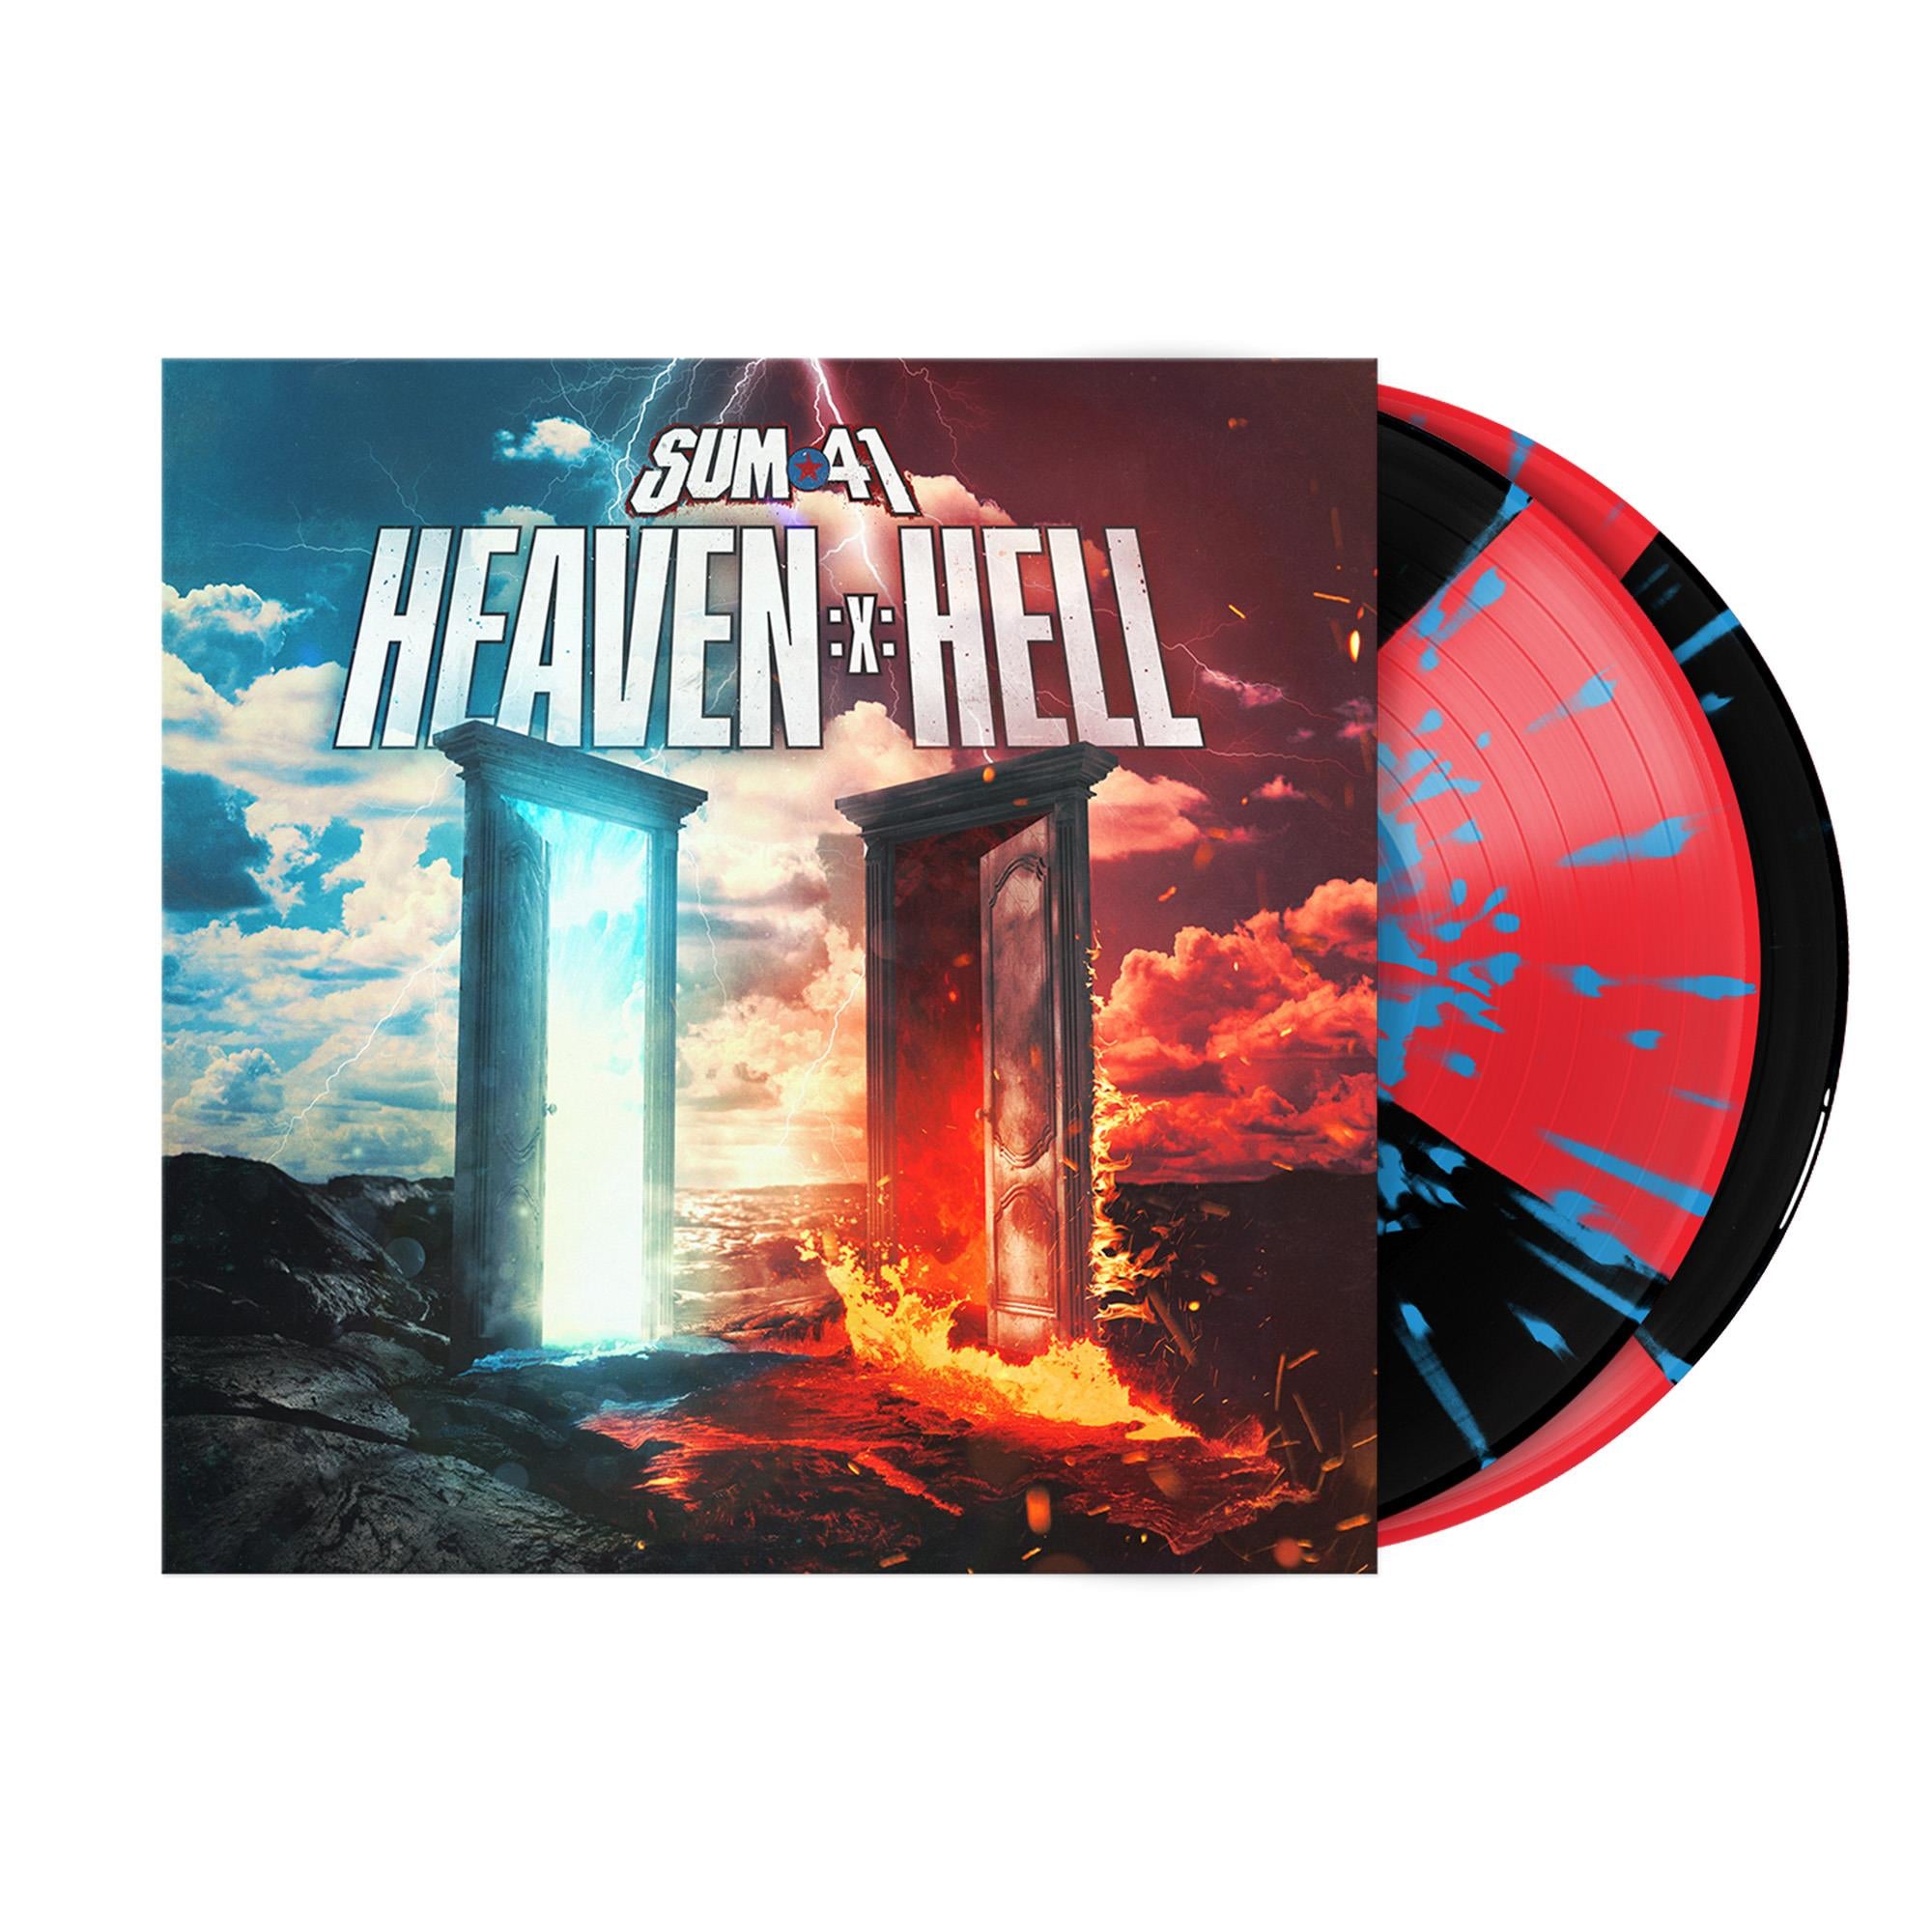 heaven :x: hell (jb hi-fi au exclusive black & red quad with blue splatter vinyl)